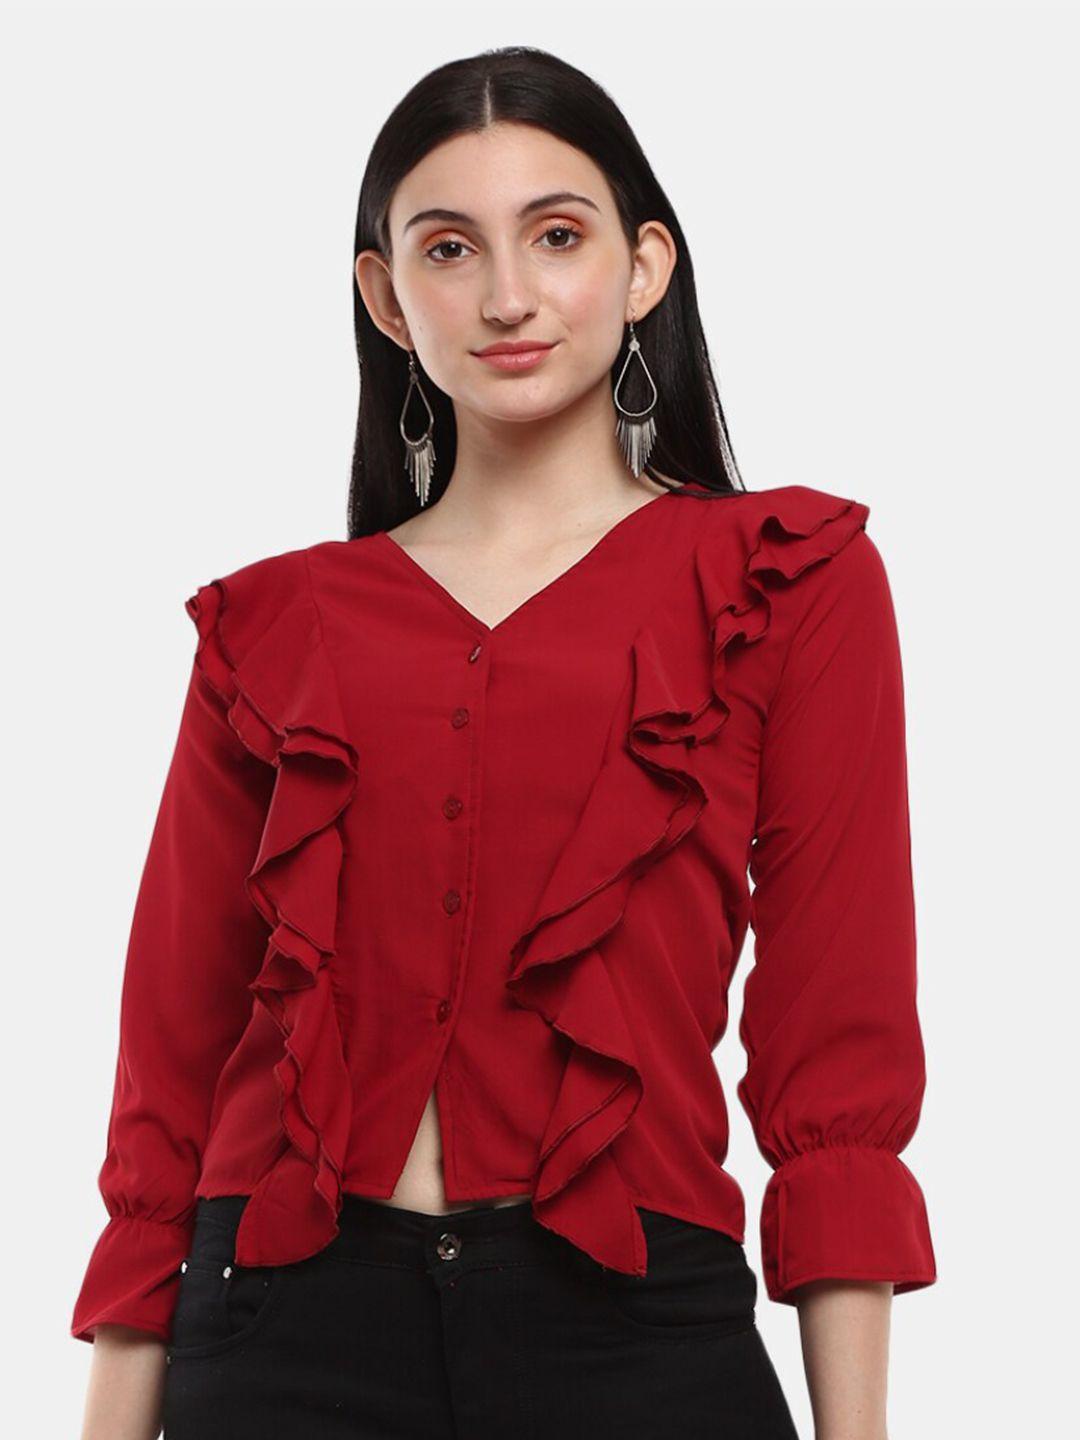 v-mart women western solid georgette maroon ruffles shirt style top